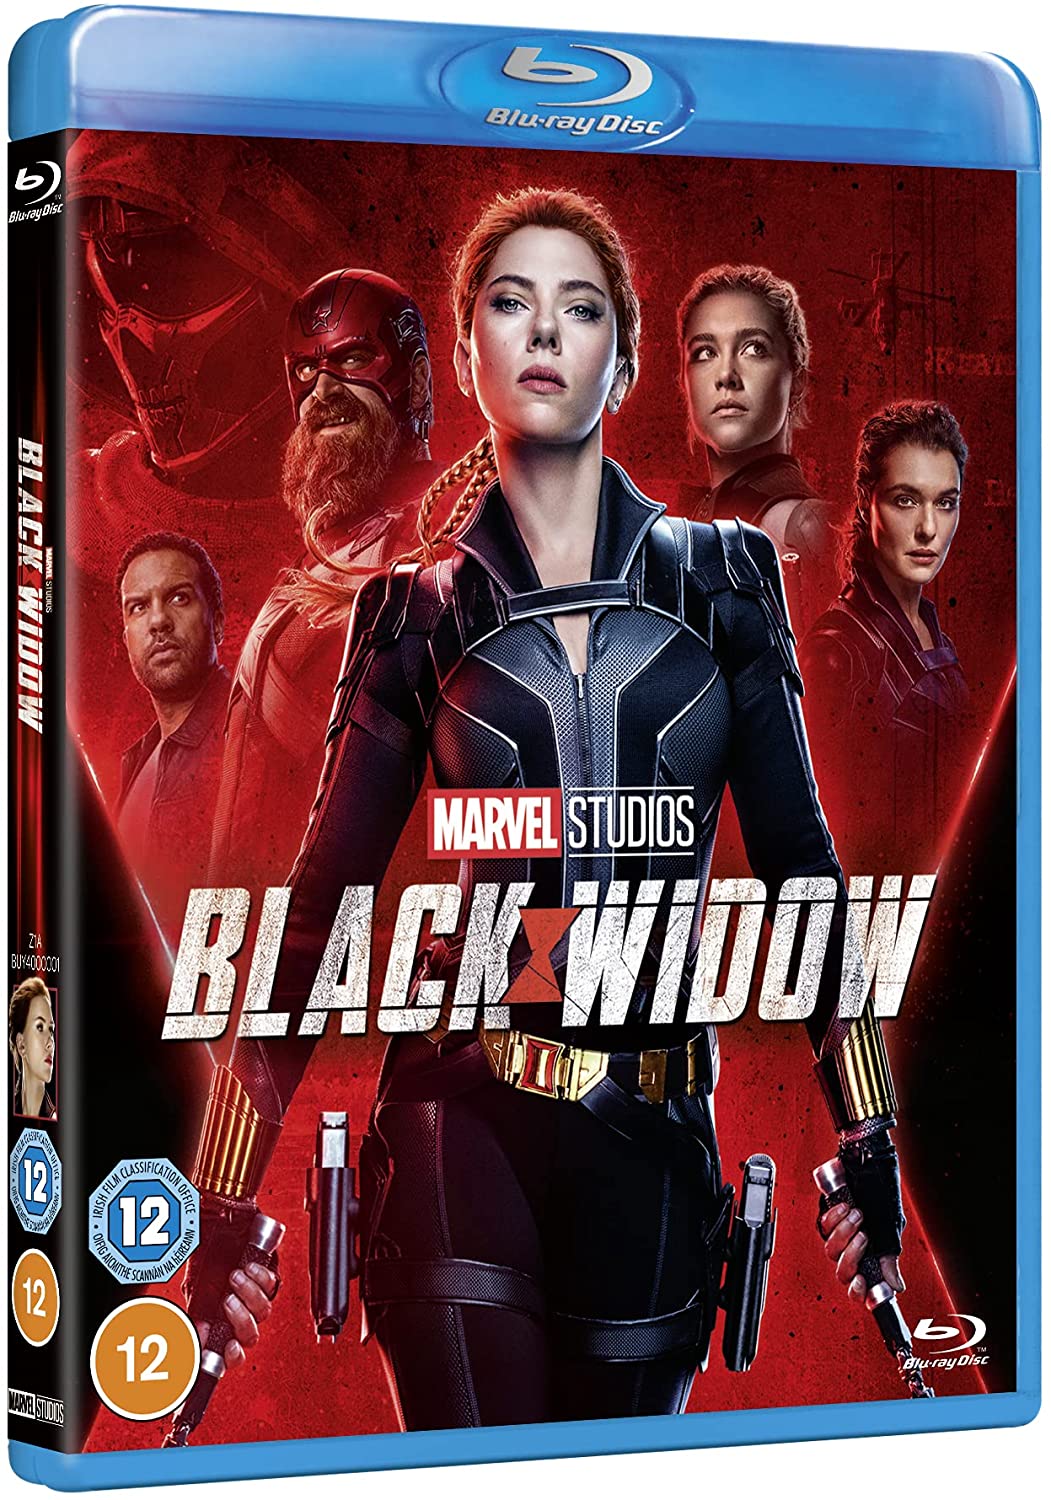 Marvel Studios Black Widow [2021] [Region Free] - Action/Adventure [Blu-ray]